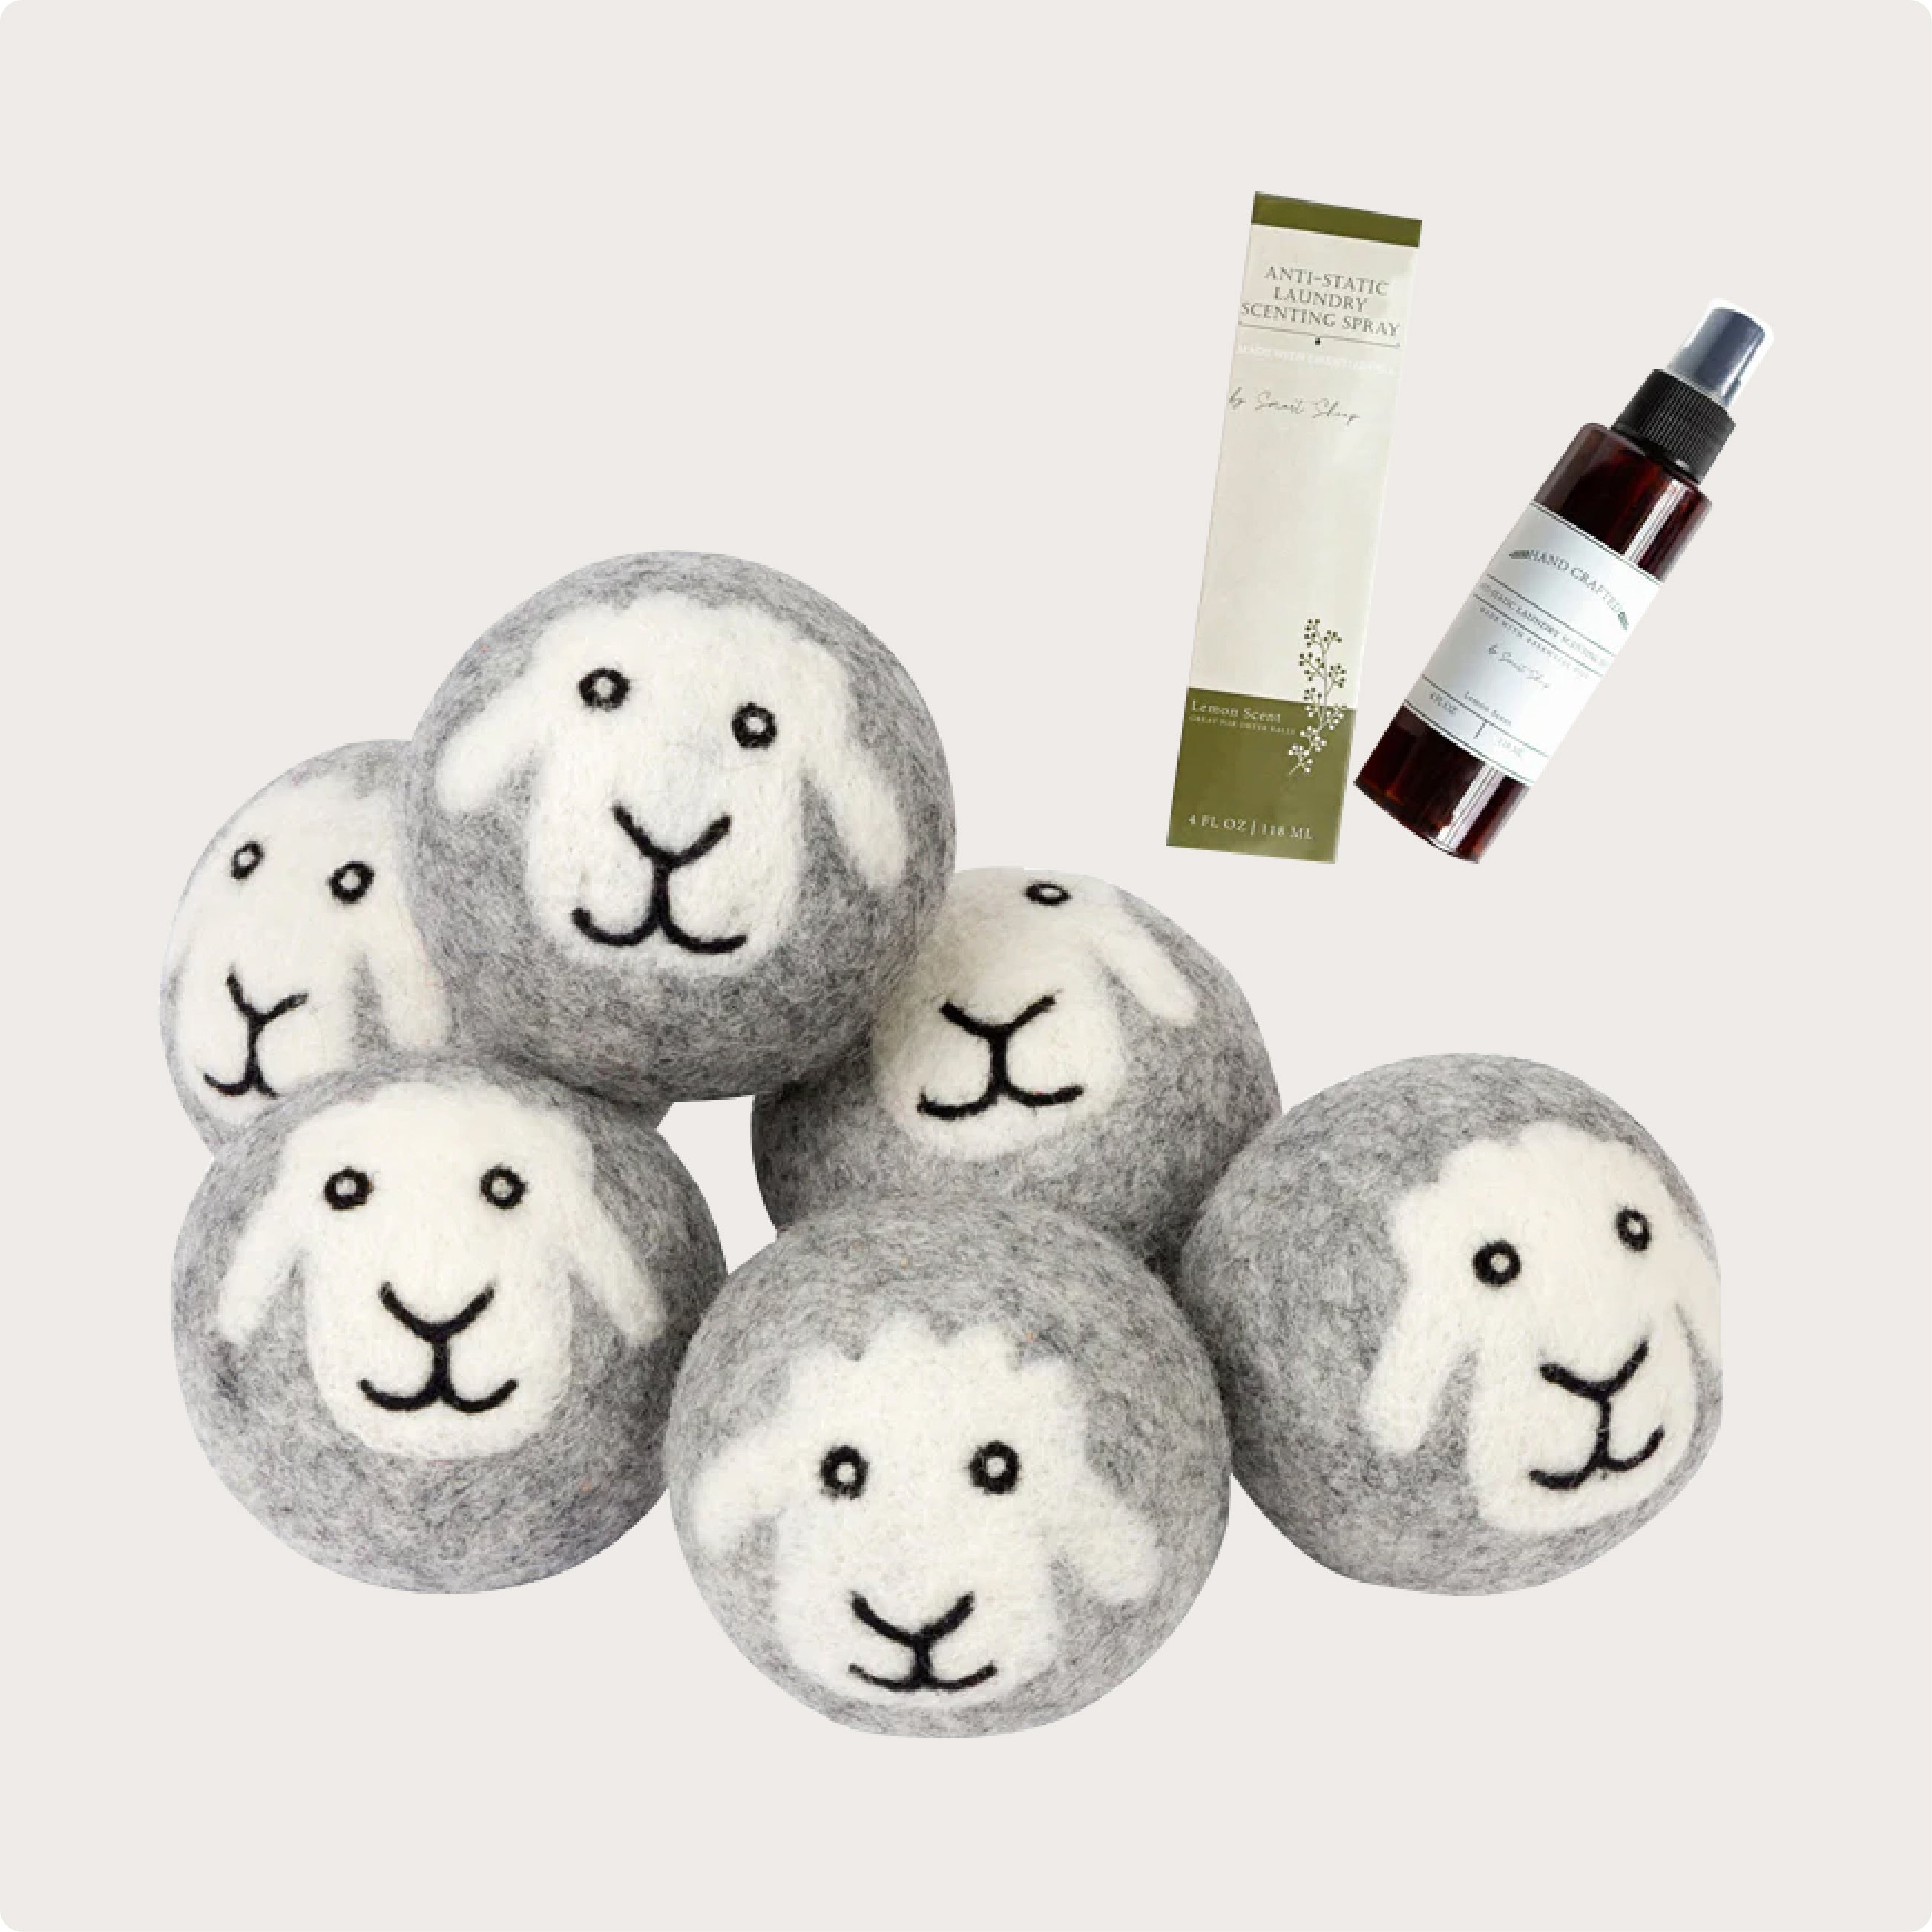 6 Smiling Sheep Wool Dryer Balls Plus Anti-Static Essential Oil Spray